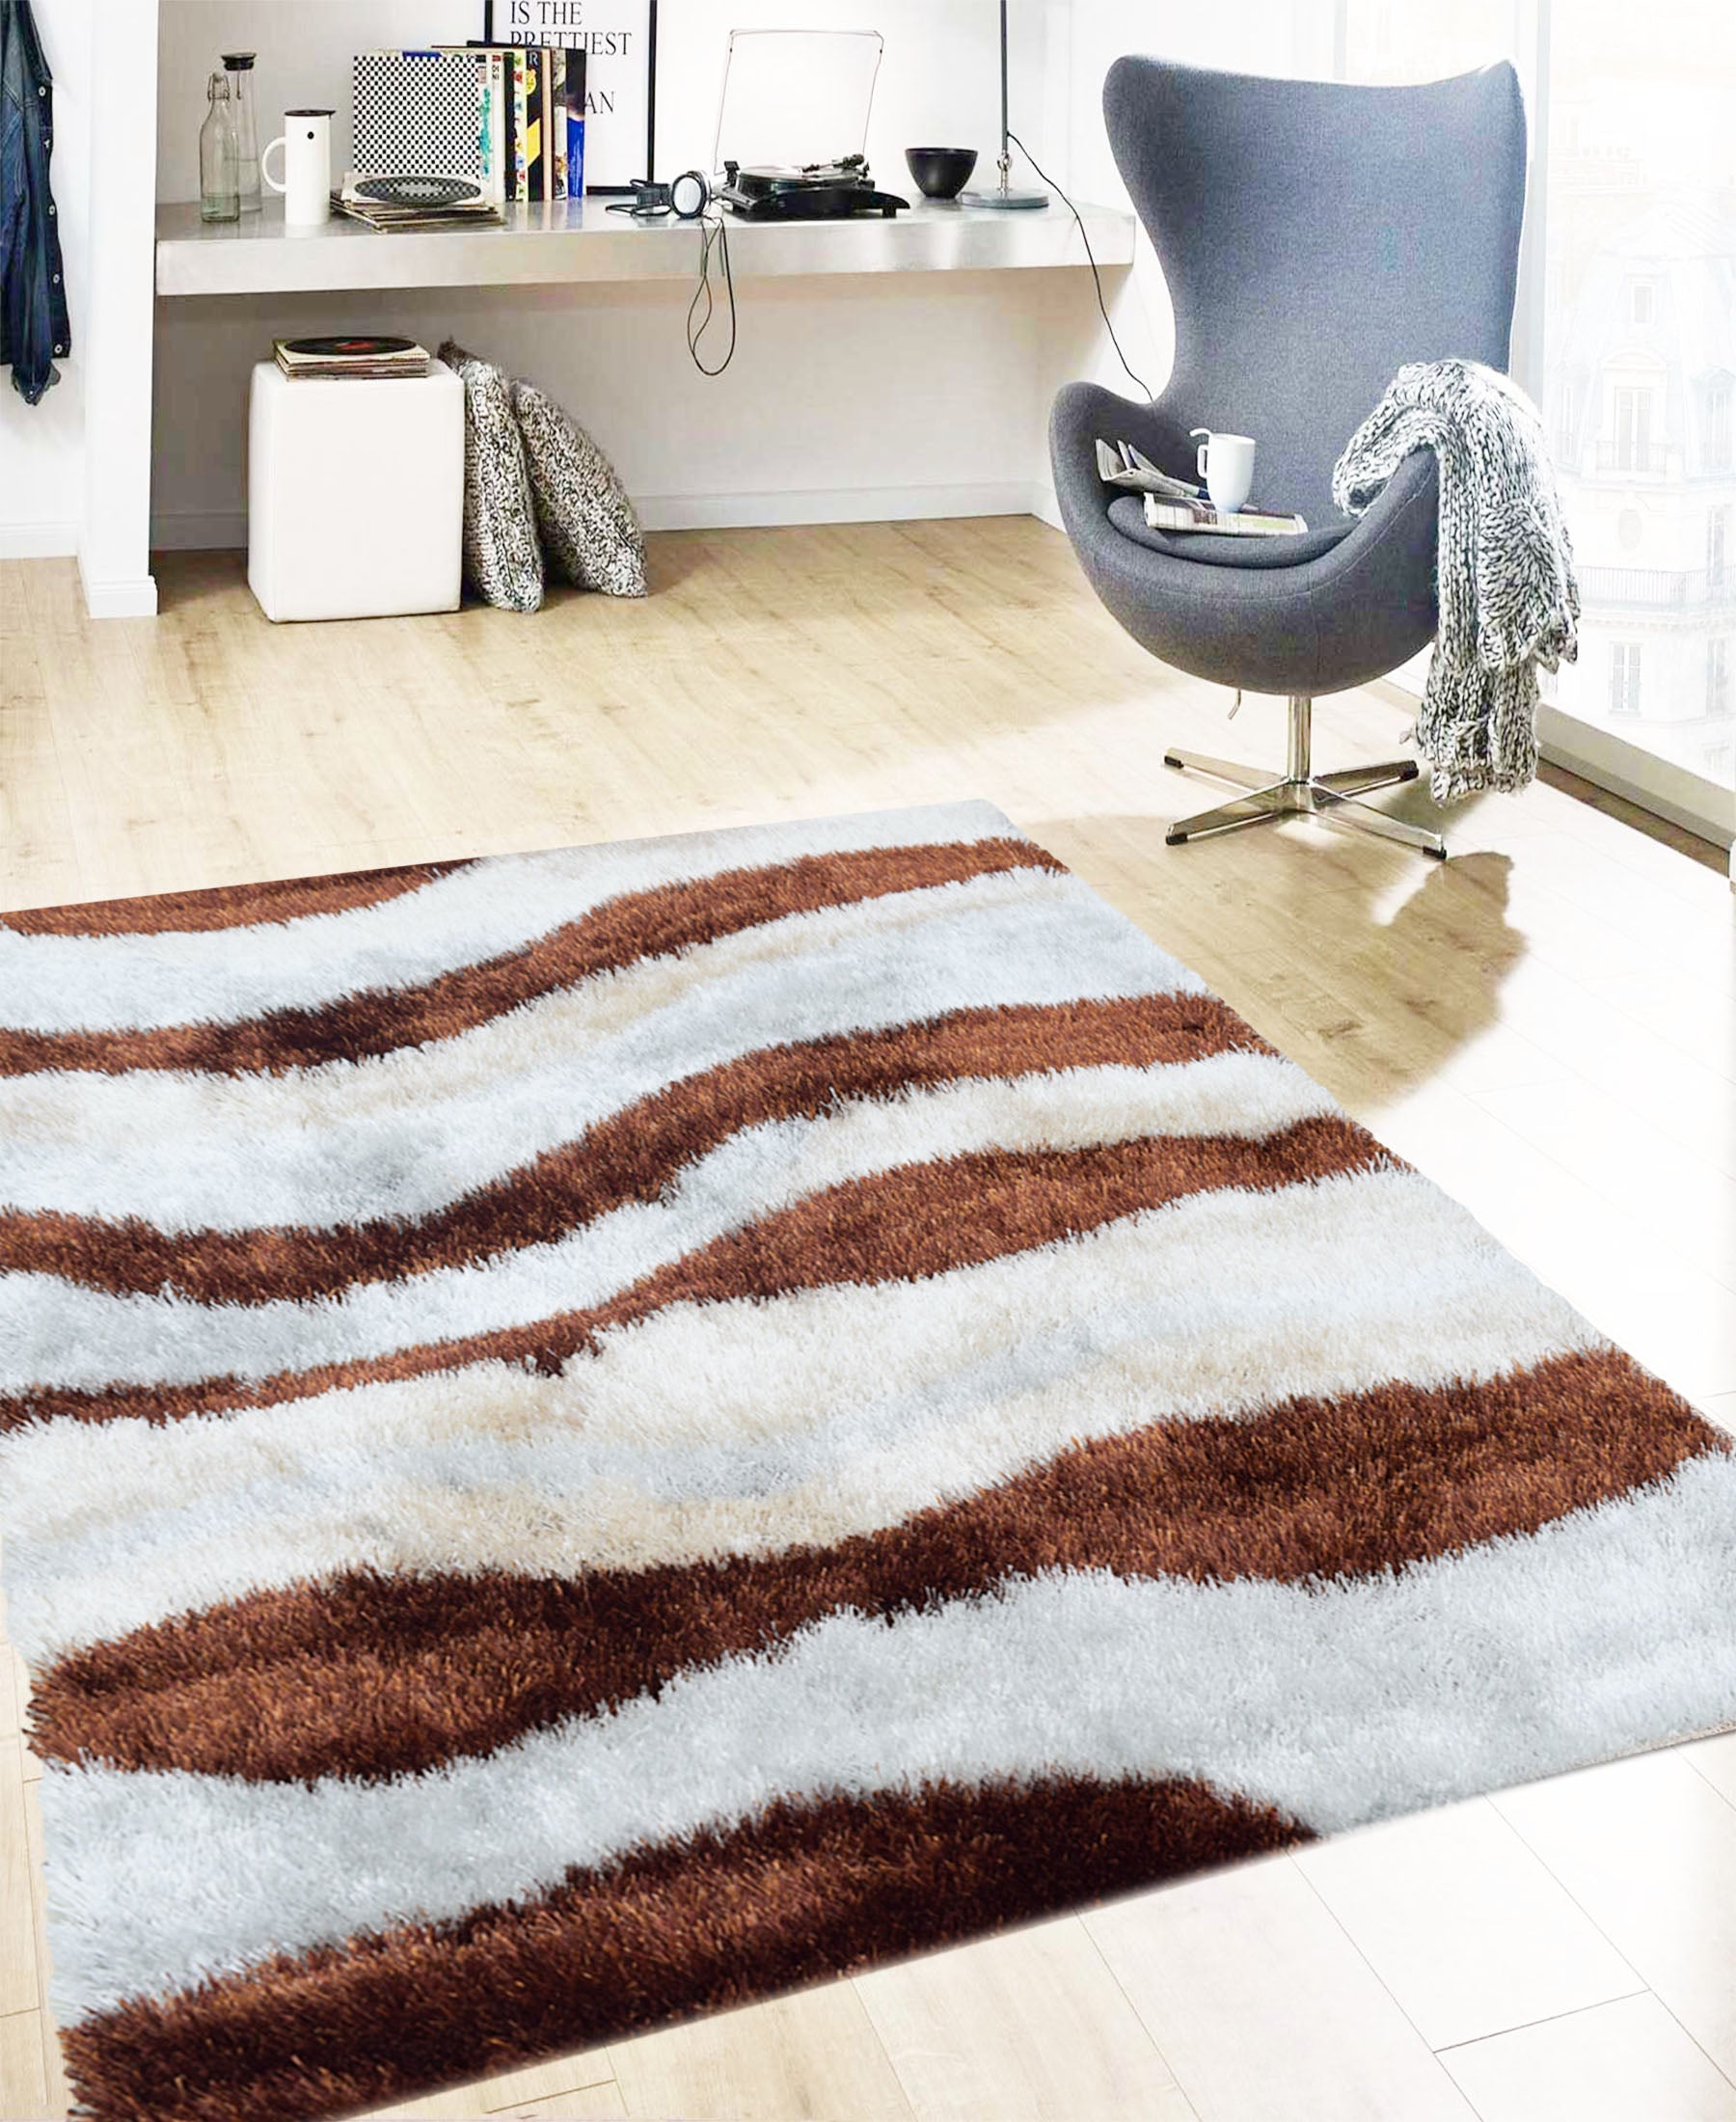 Shaggy Gritty Carpet 1600mm x 2200mm - Brown & Beige